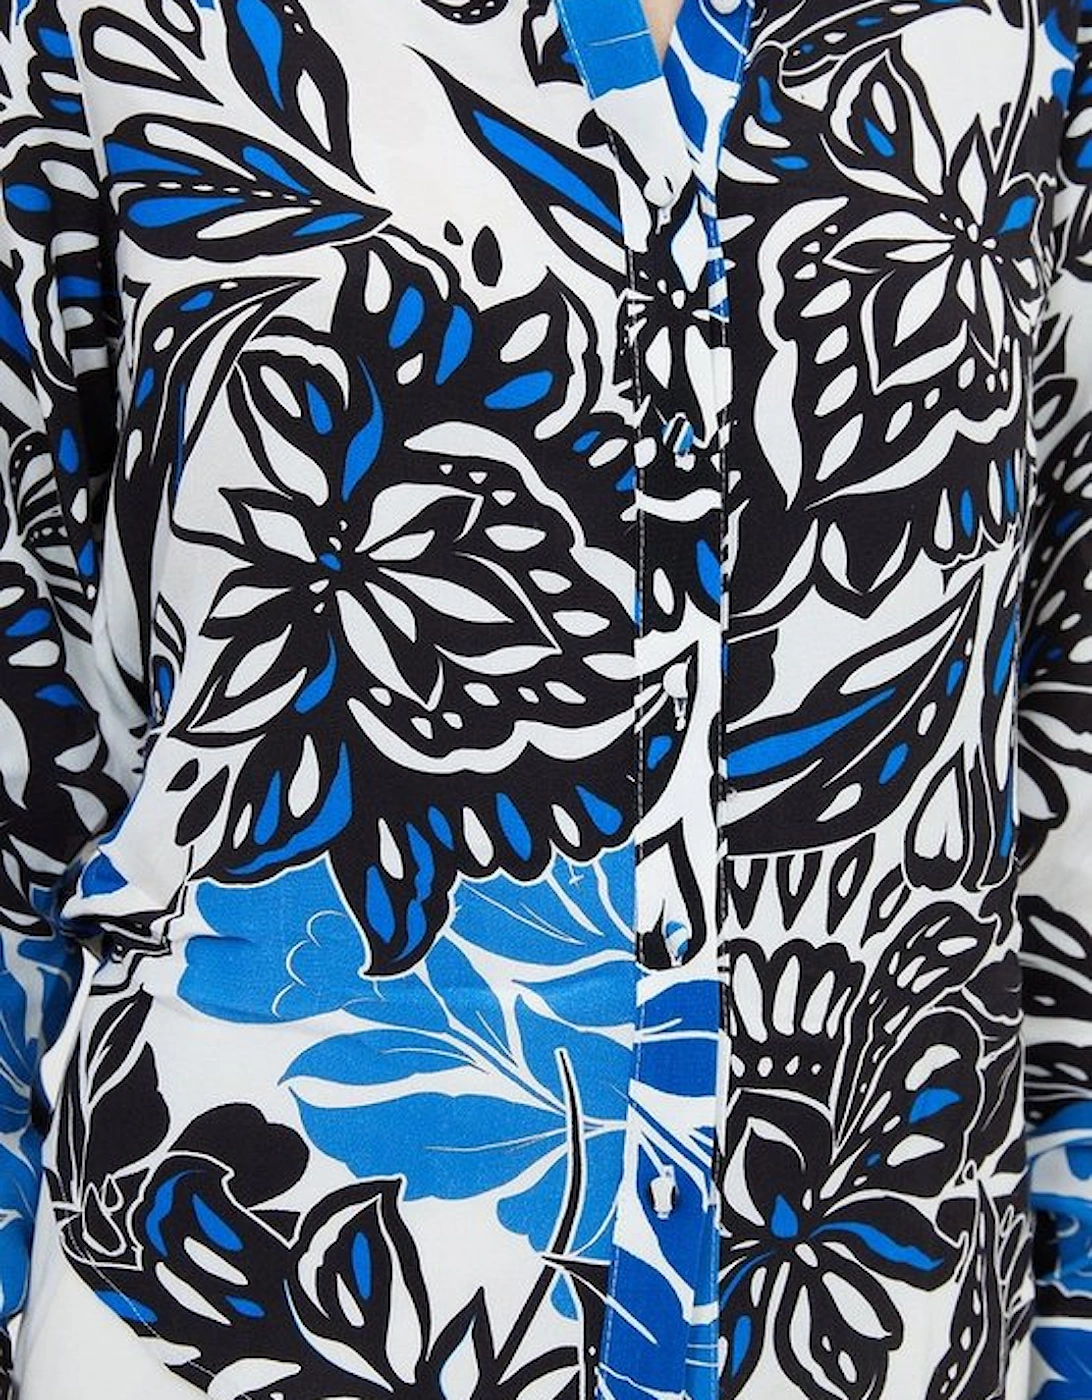 Floral Printed Morocain Woven Shirt